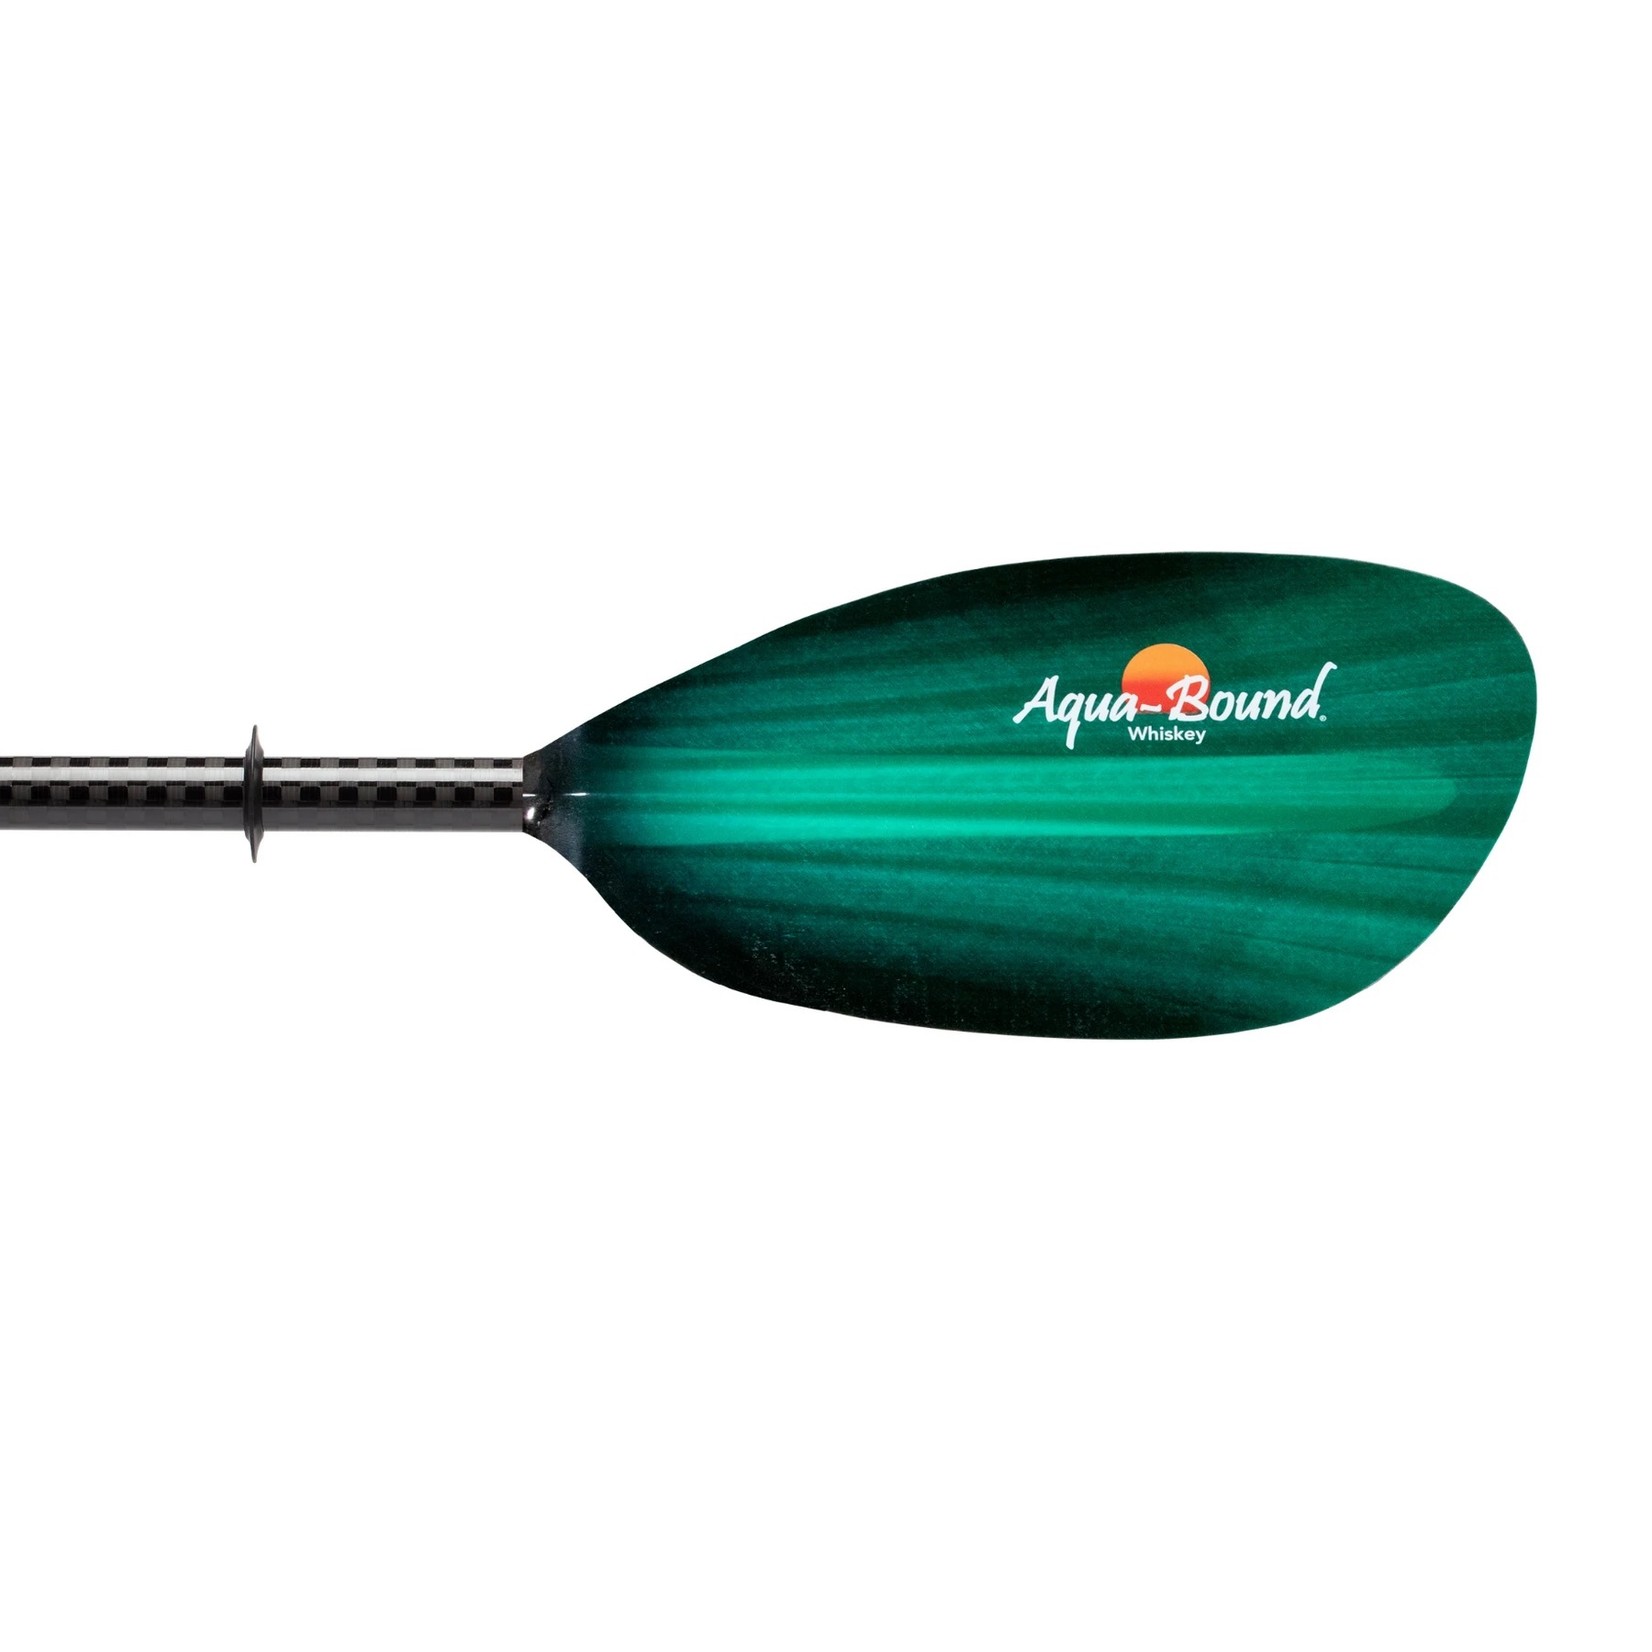 Carbon Fiber Shaft Teal Green Blade Kayak Paddle 